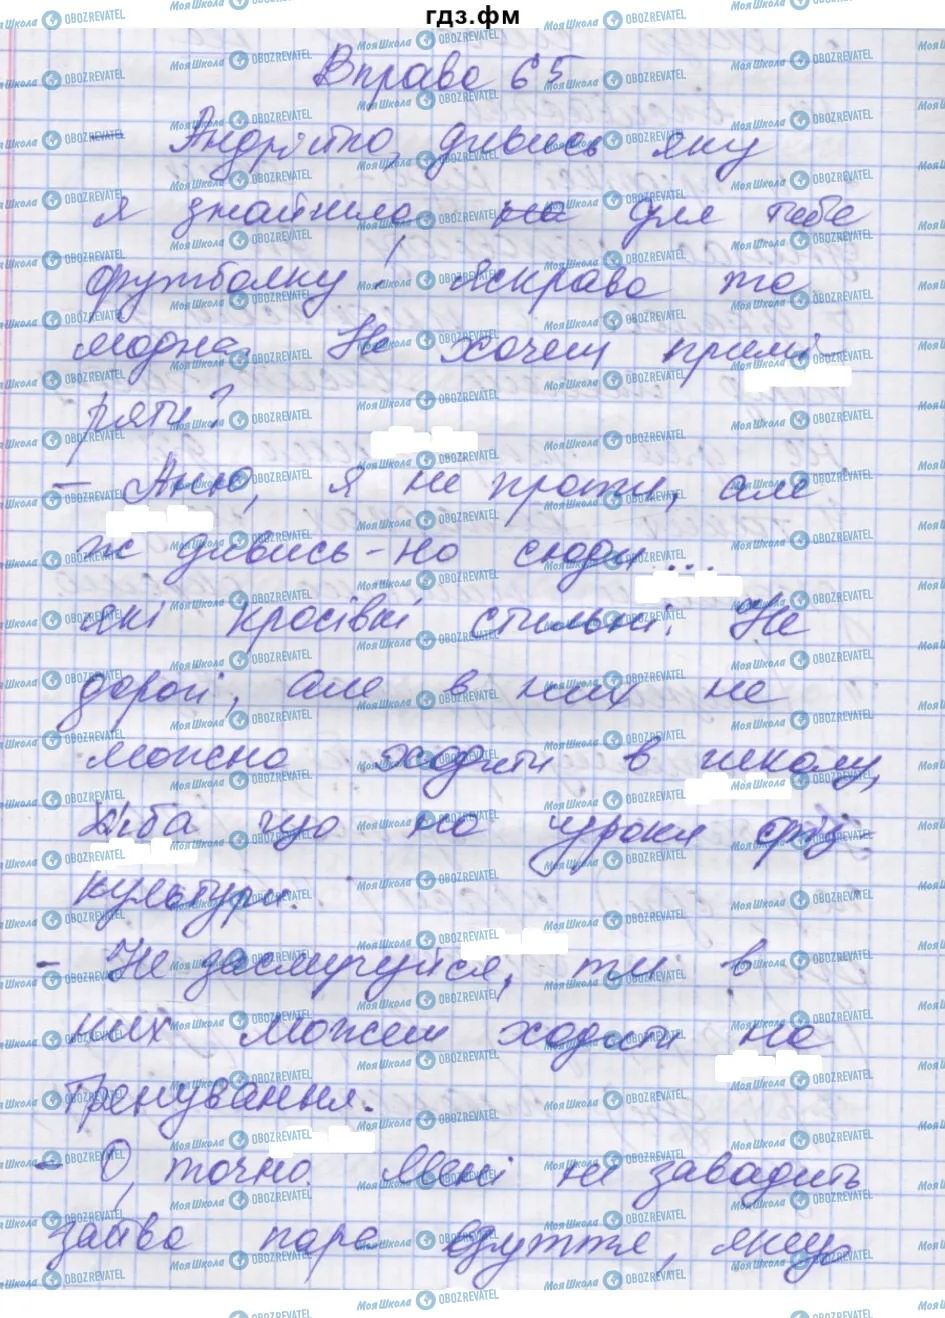 ГДЗ Укр мова 7 класс страница 65